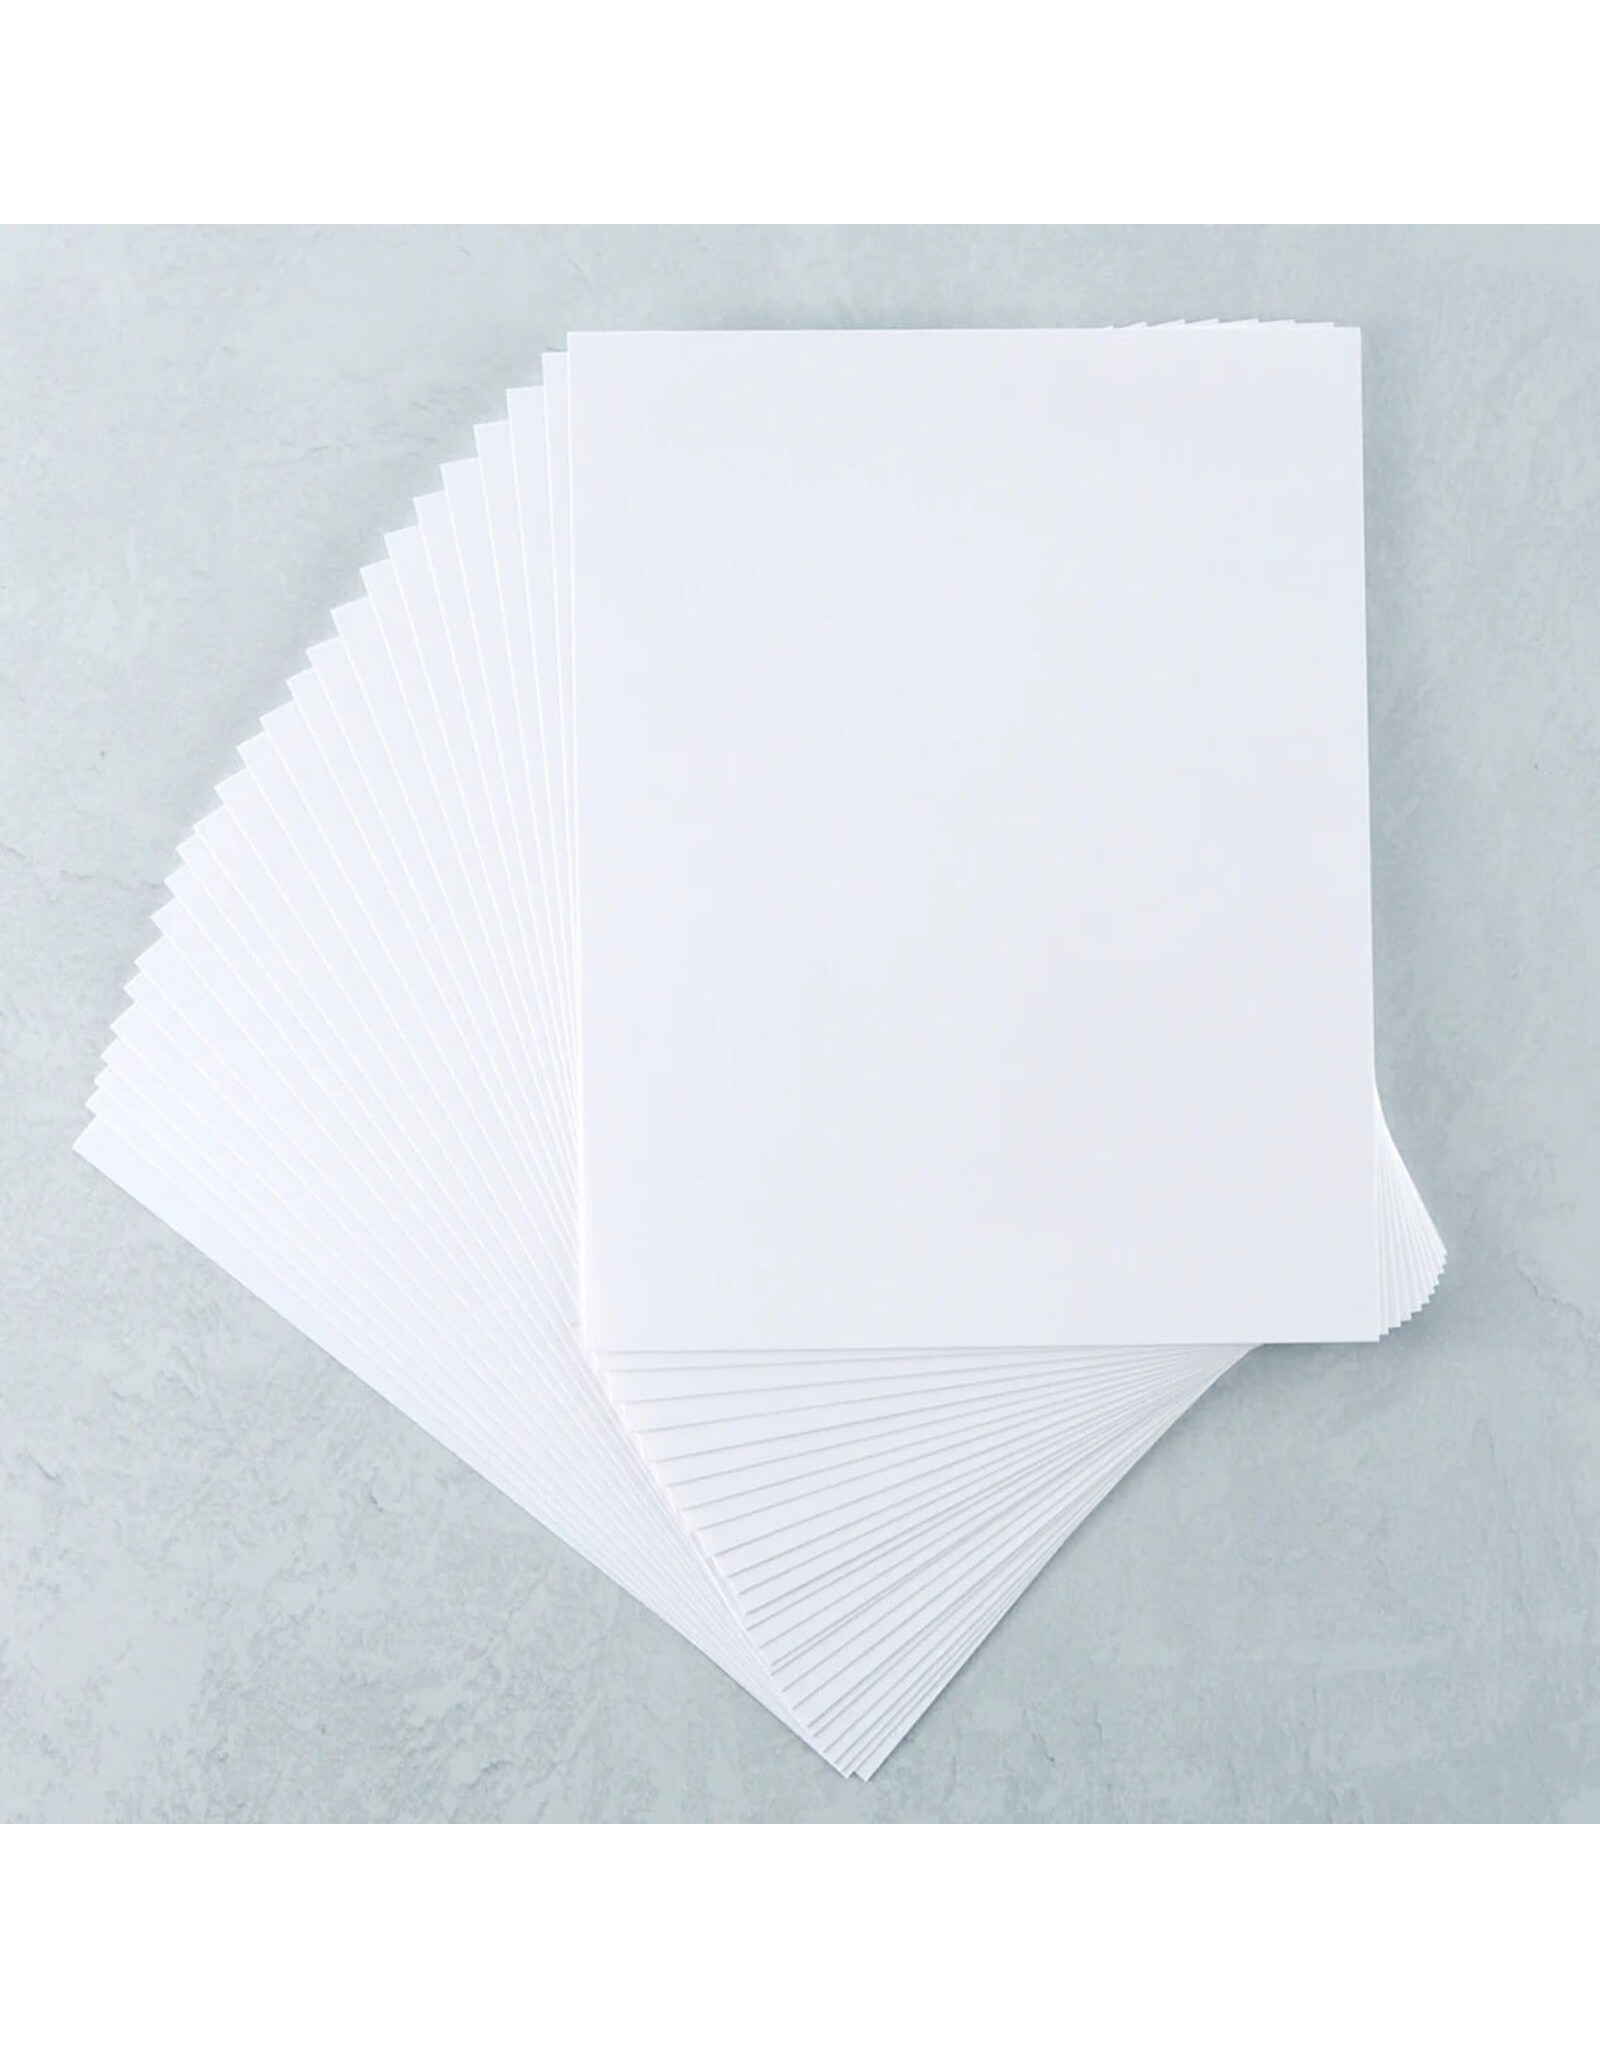 Spellbinders Card Shoppe Essentials White Cardstock-80 LB